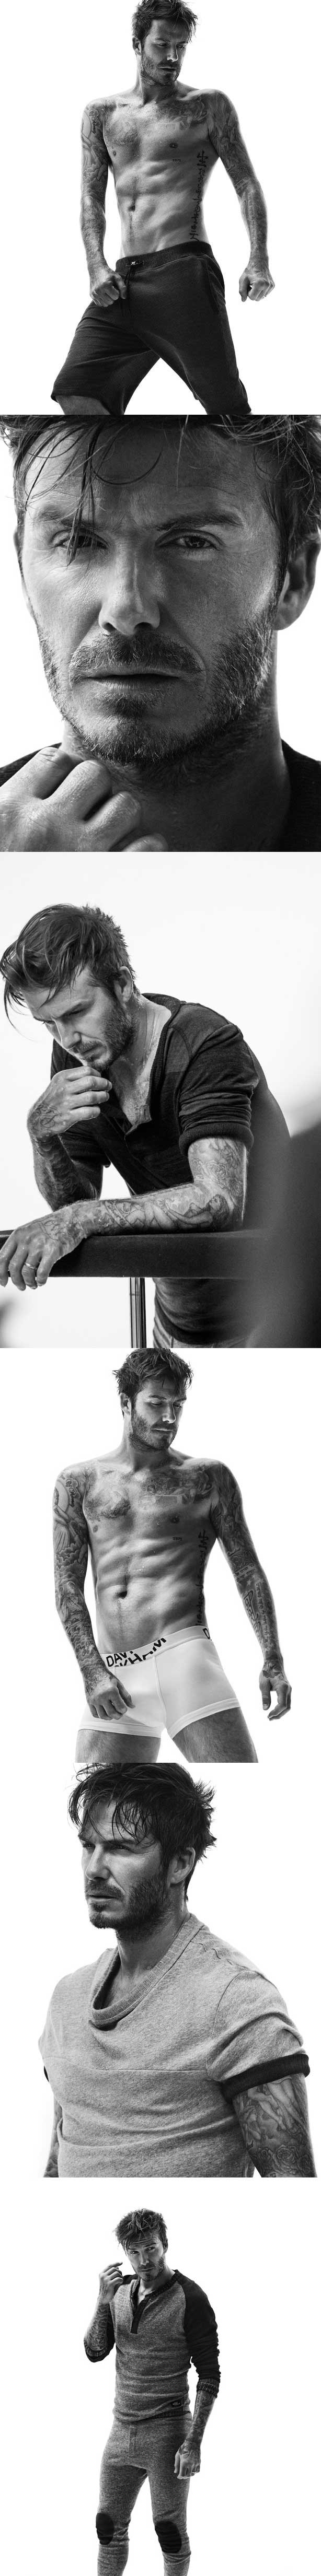 David Beckham, desaliñado y en calzoncillos